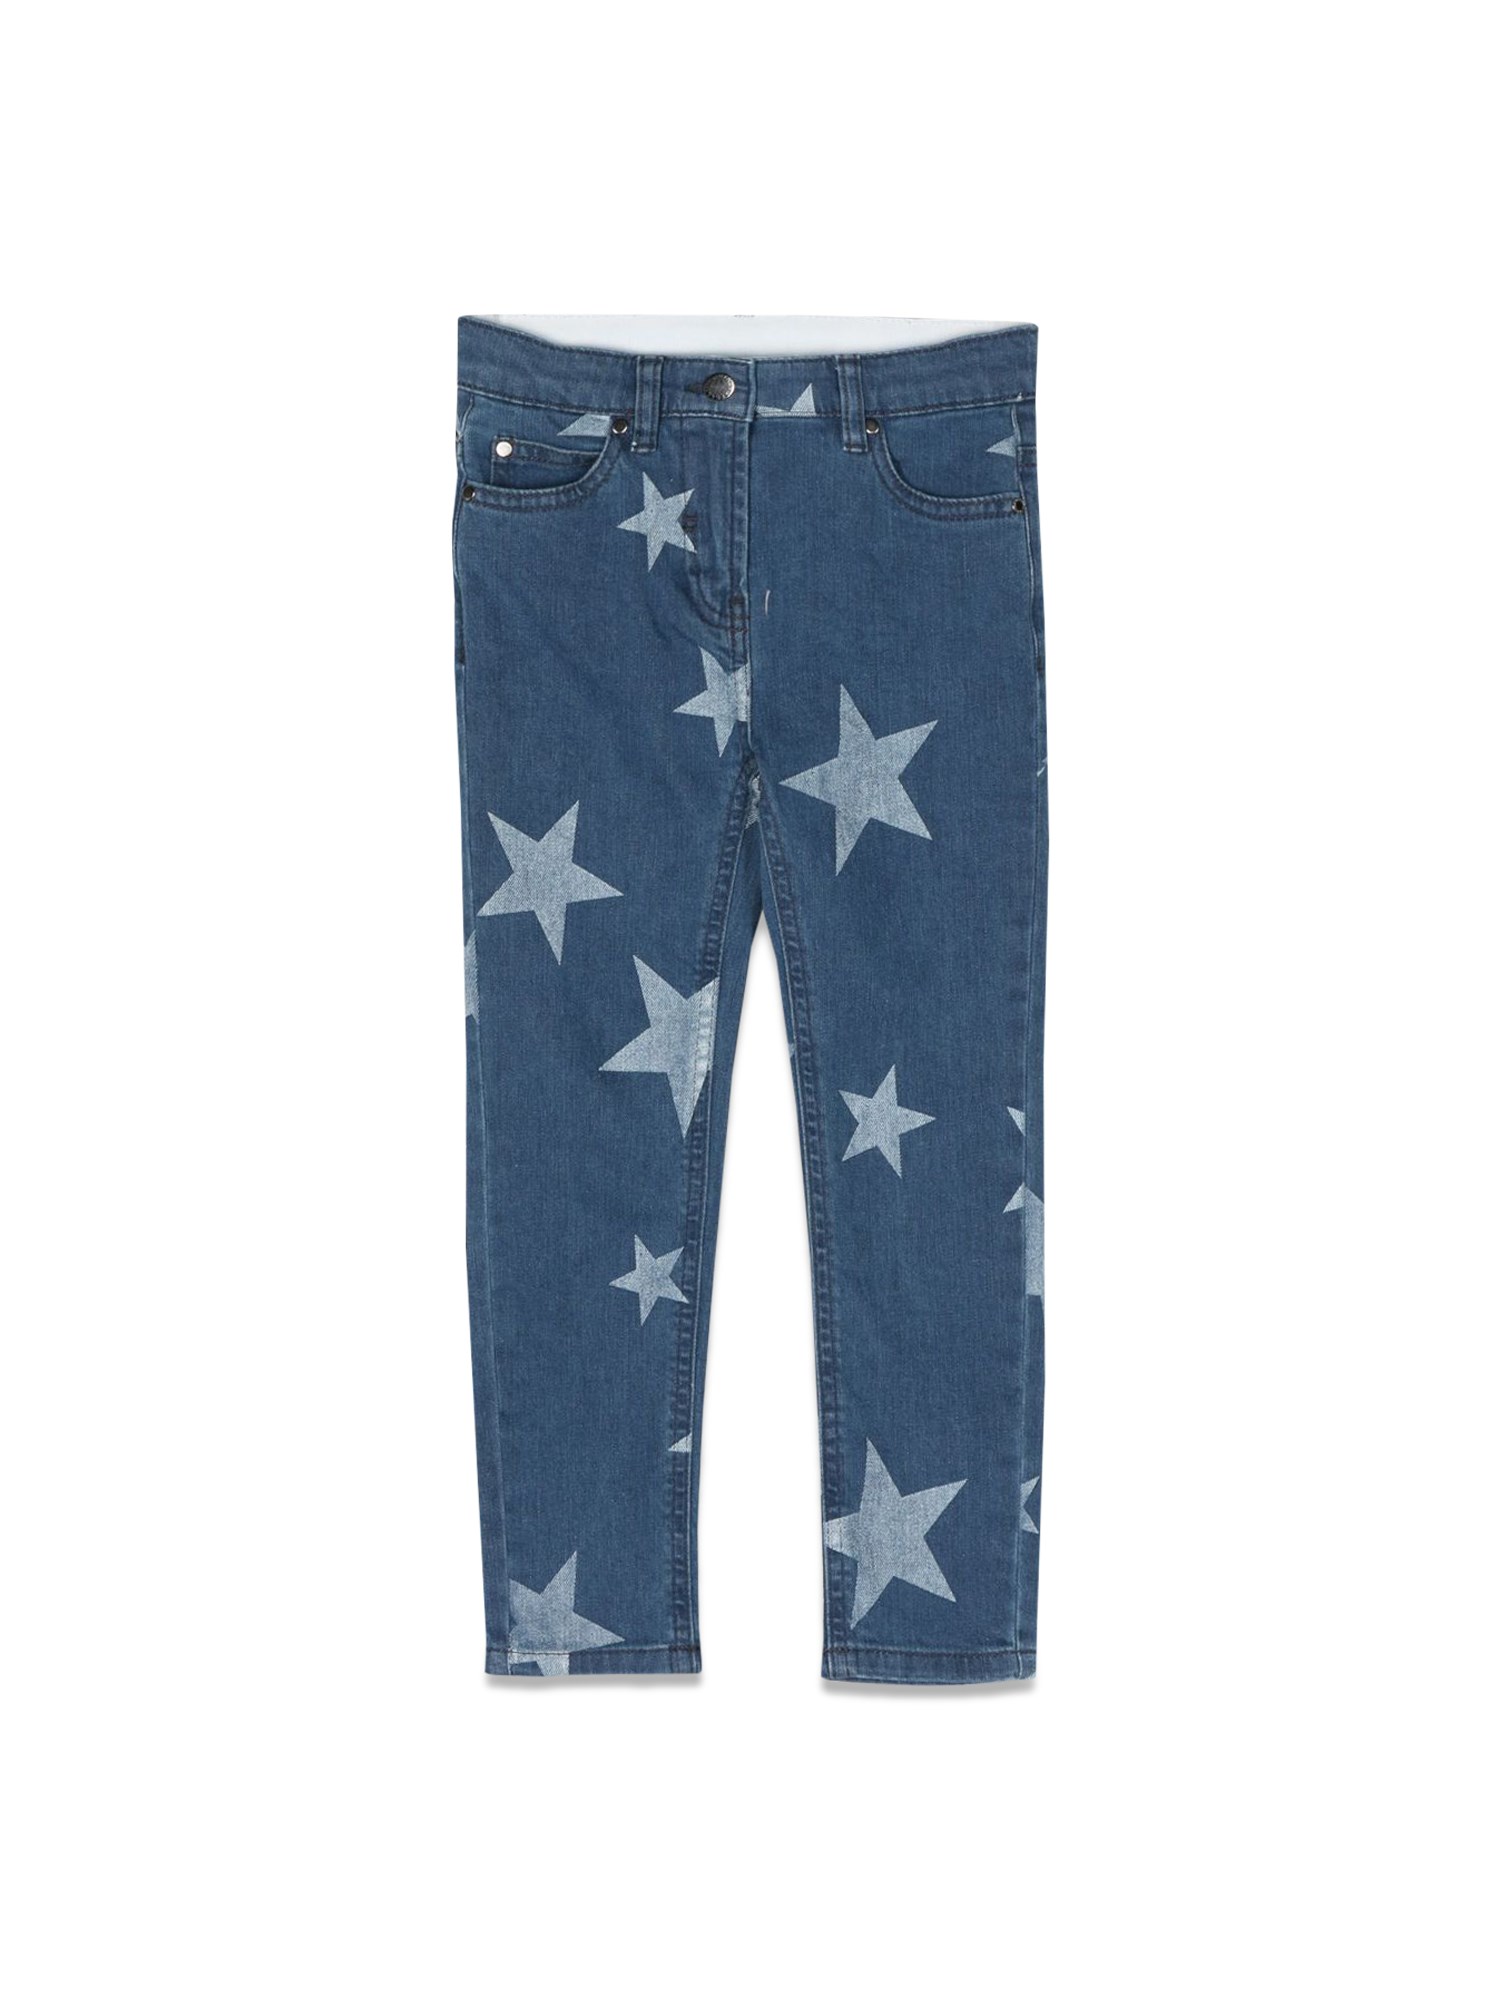 stella mccartney jeans with stars